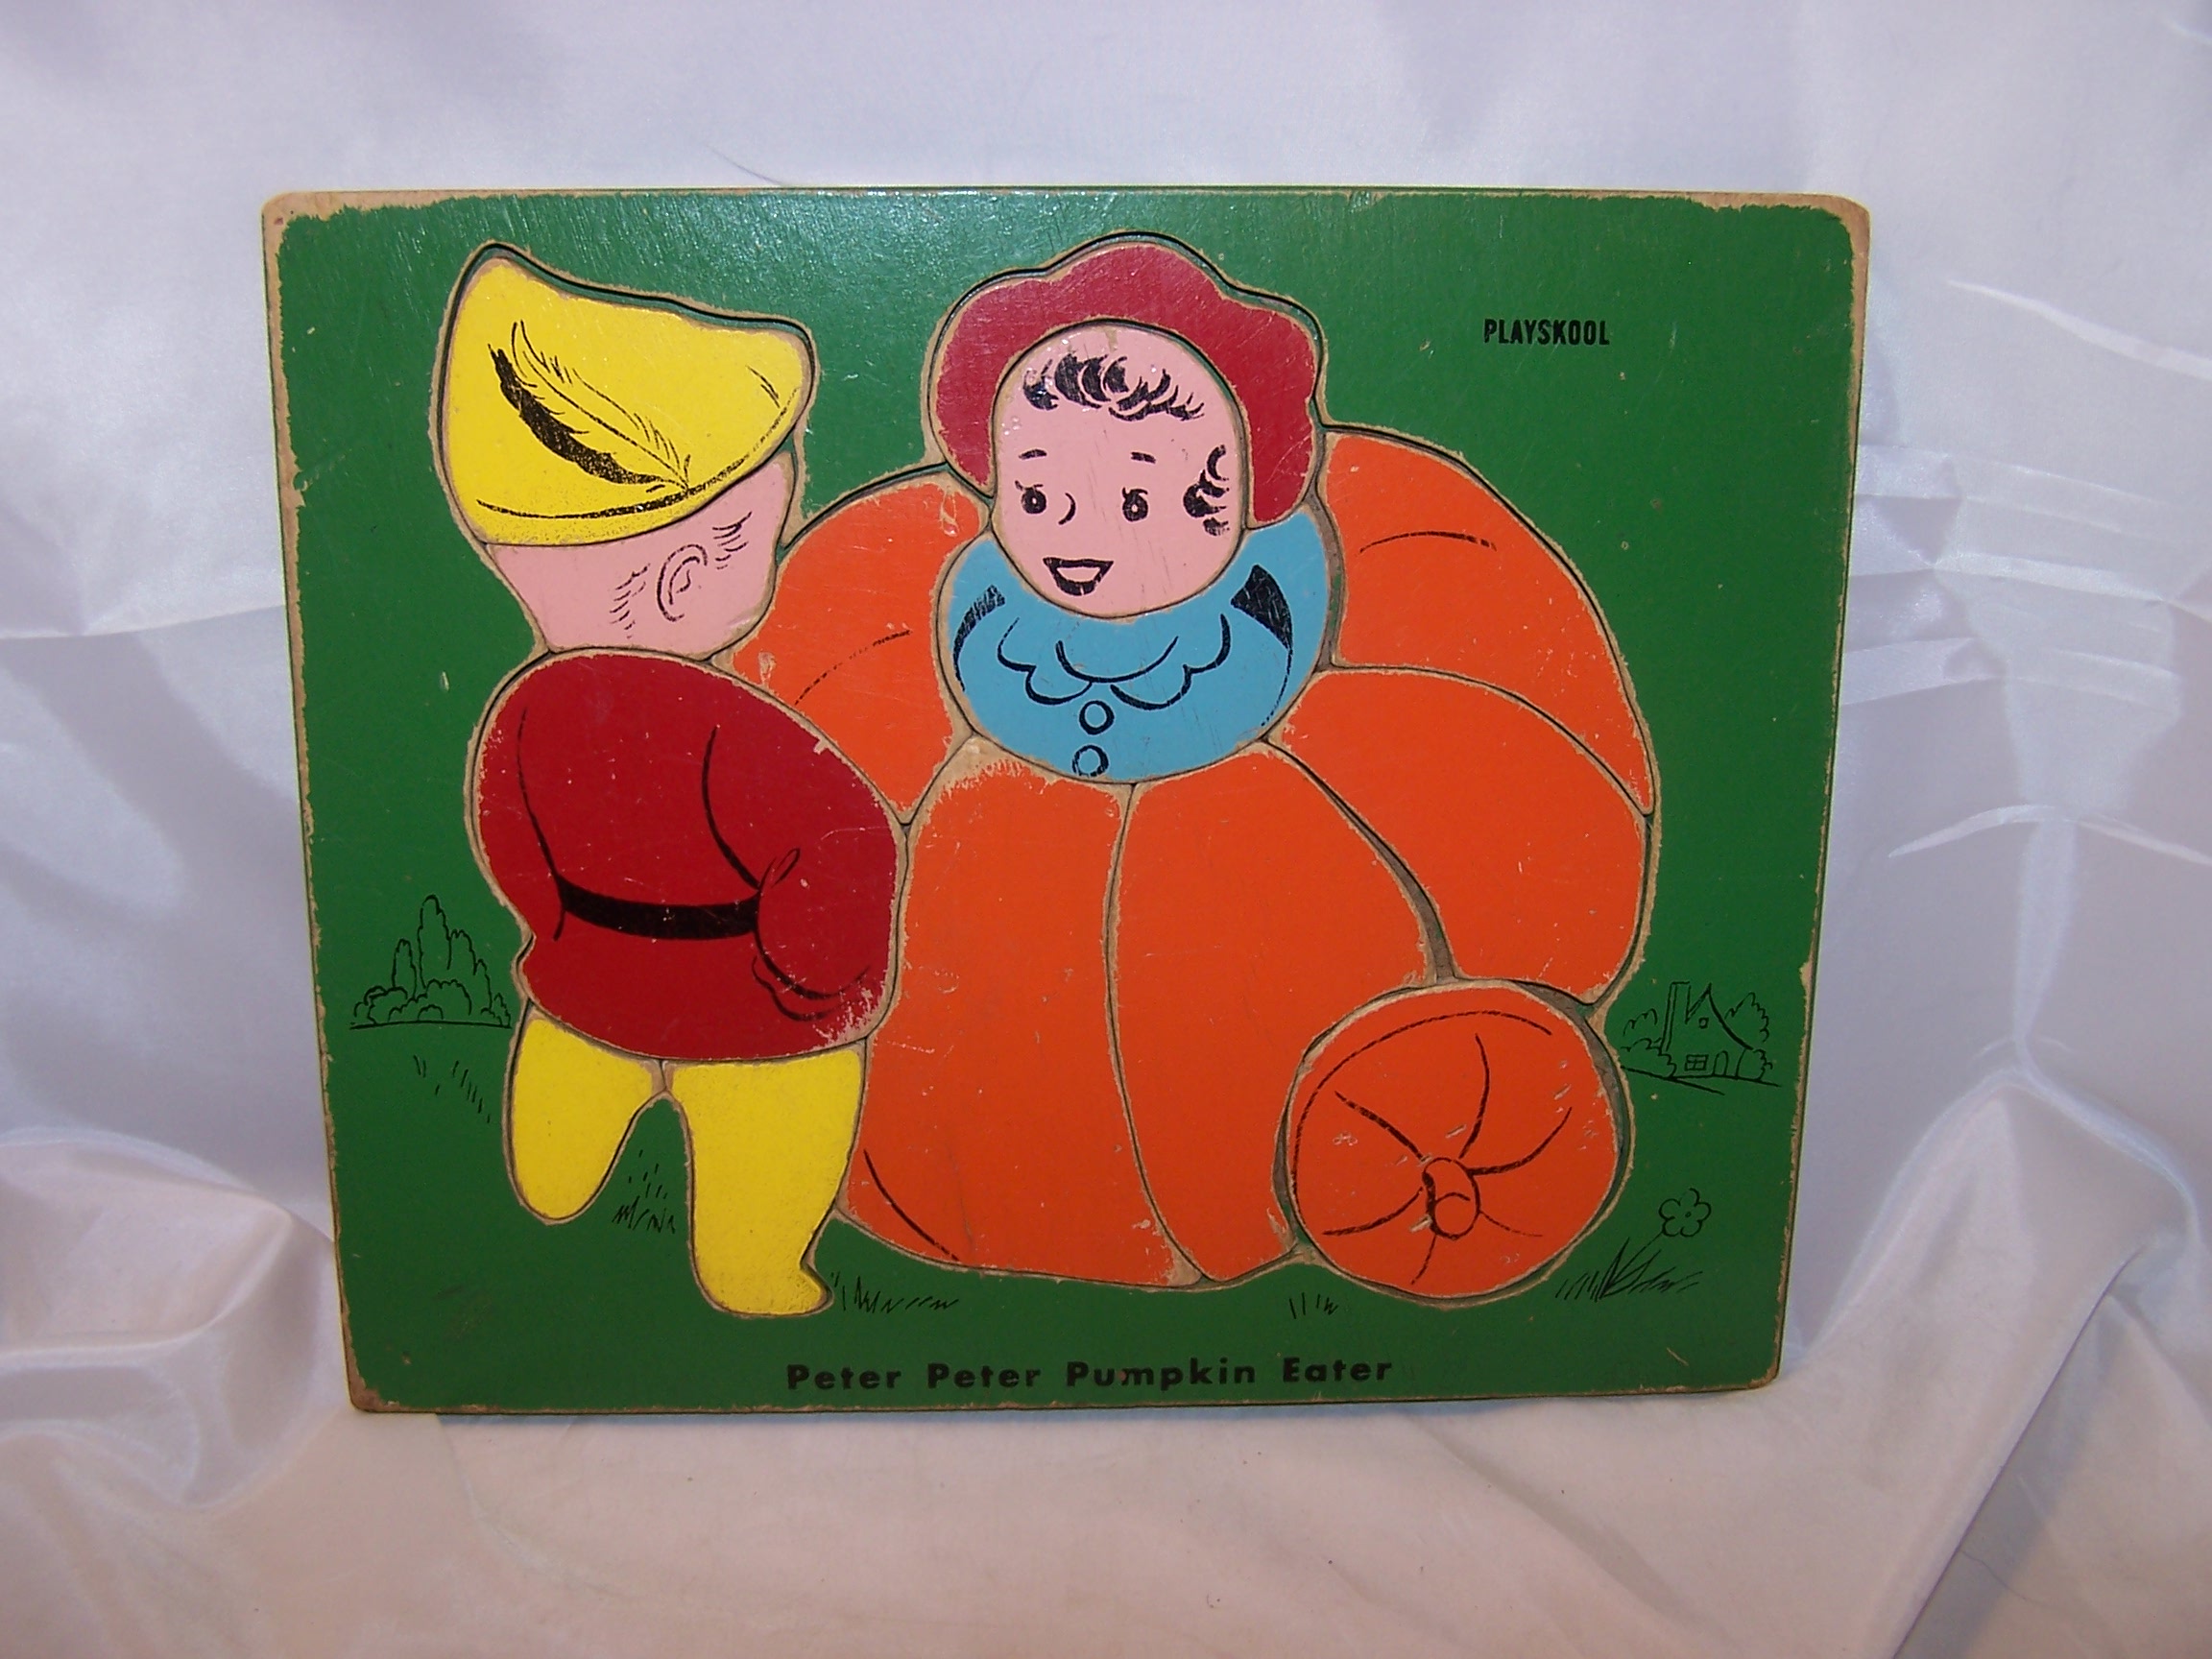 Peter Pumpkin Eater Wood Puzzle, Vintage, Playskool